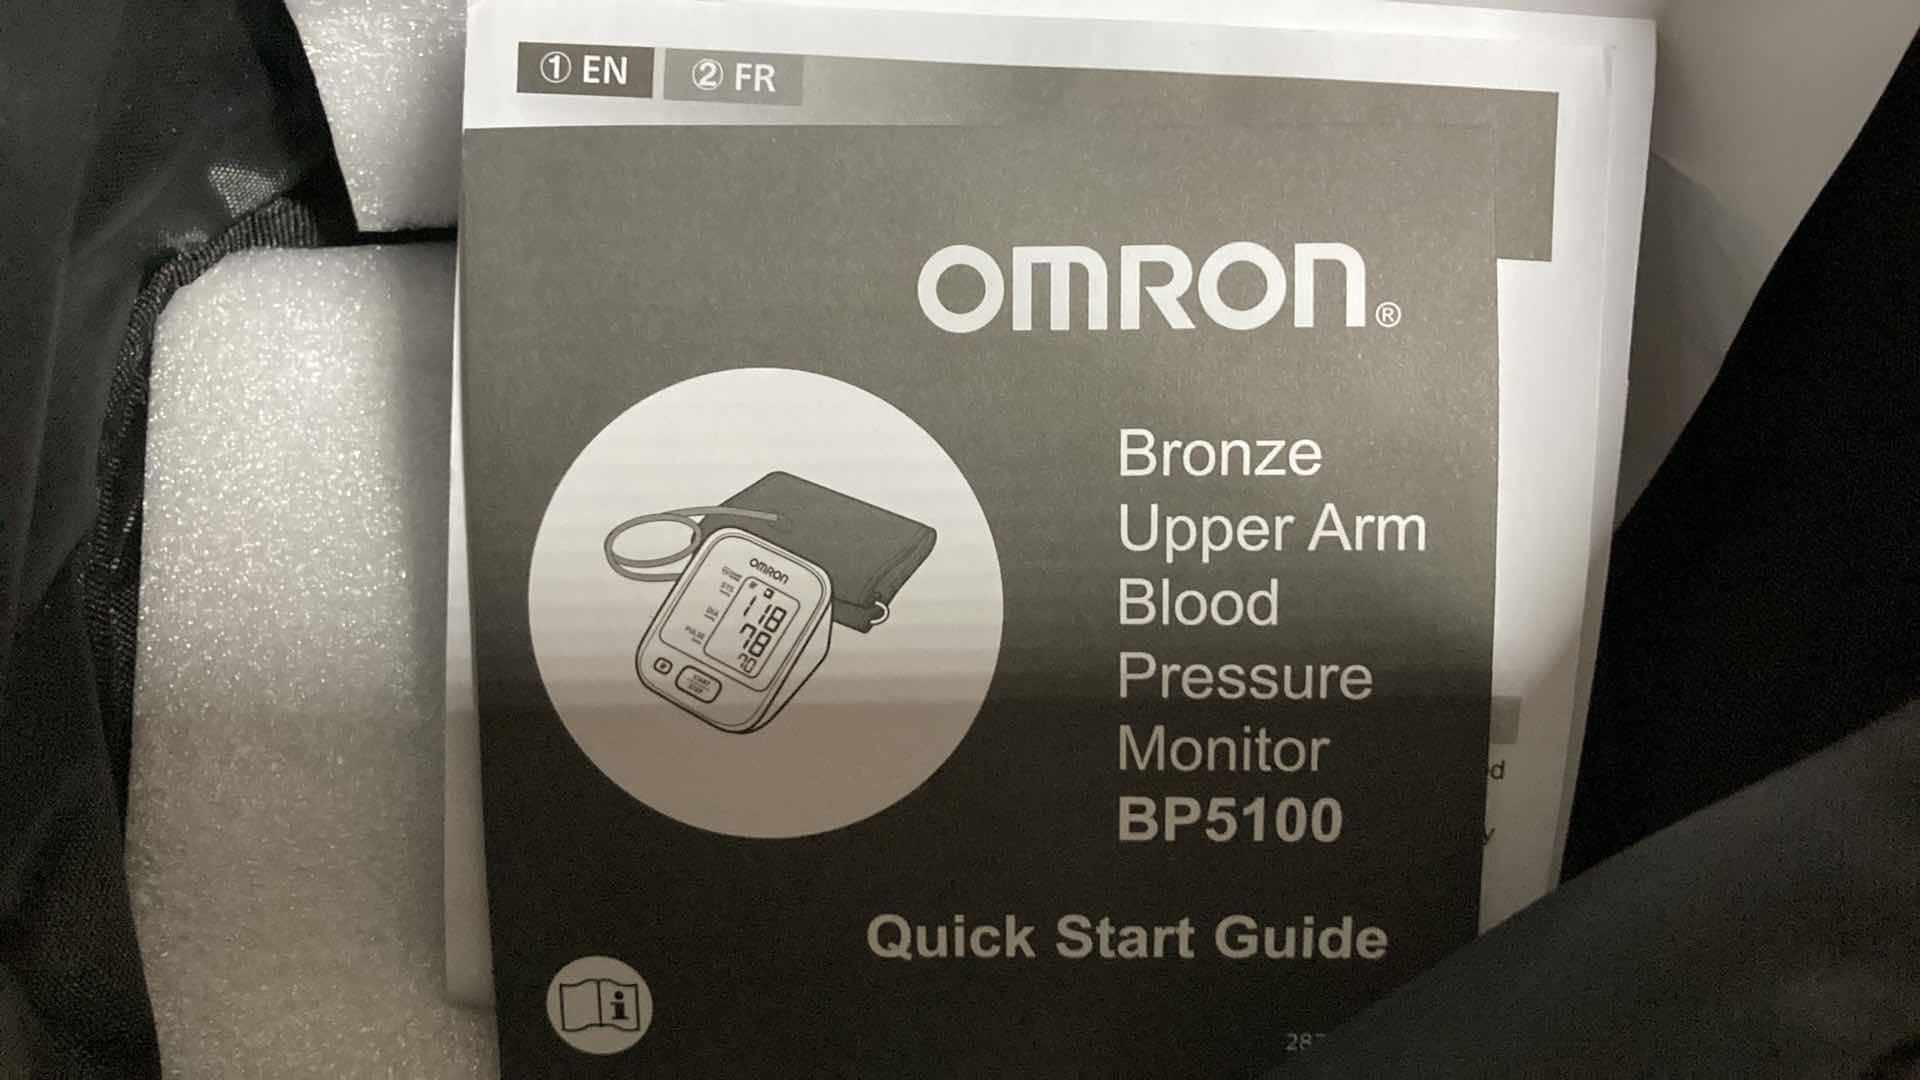 Photo 5 of OMRON BRONZE UPPER ARM BLOOD PRESSURE MONITOR MODEL BP5100 W CASE